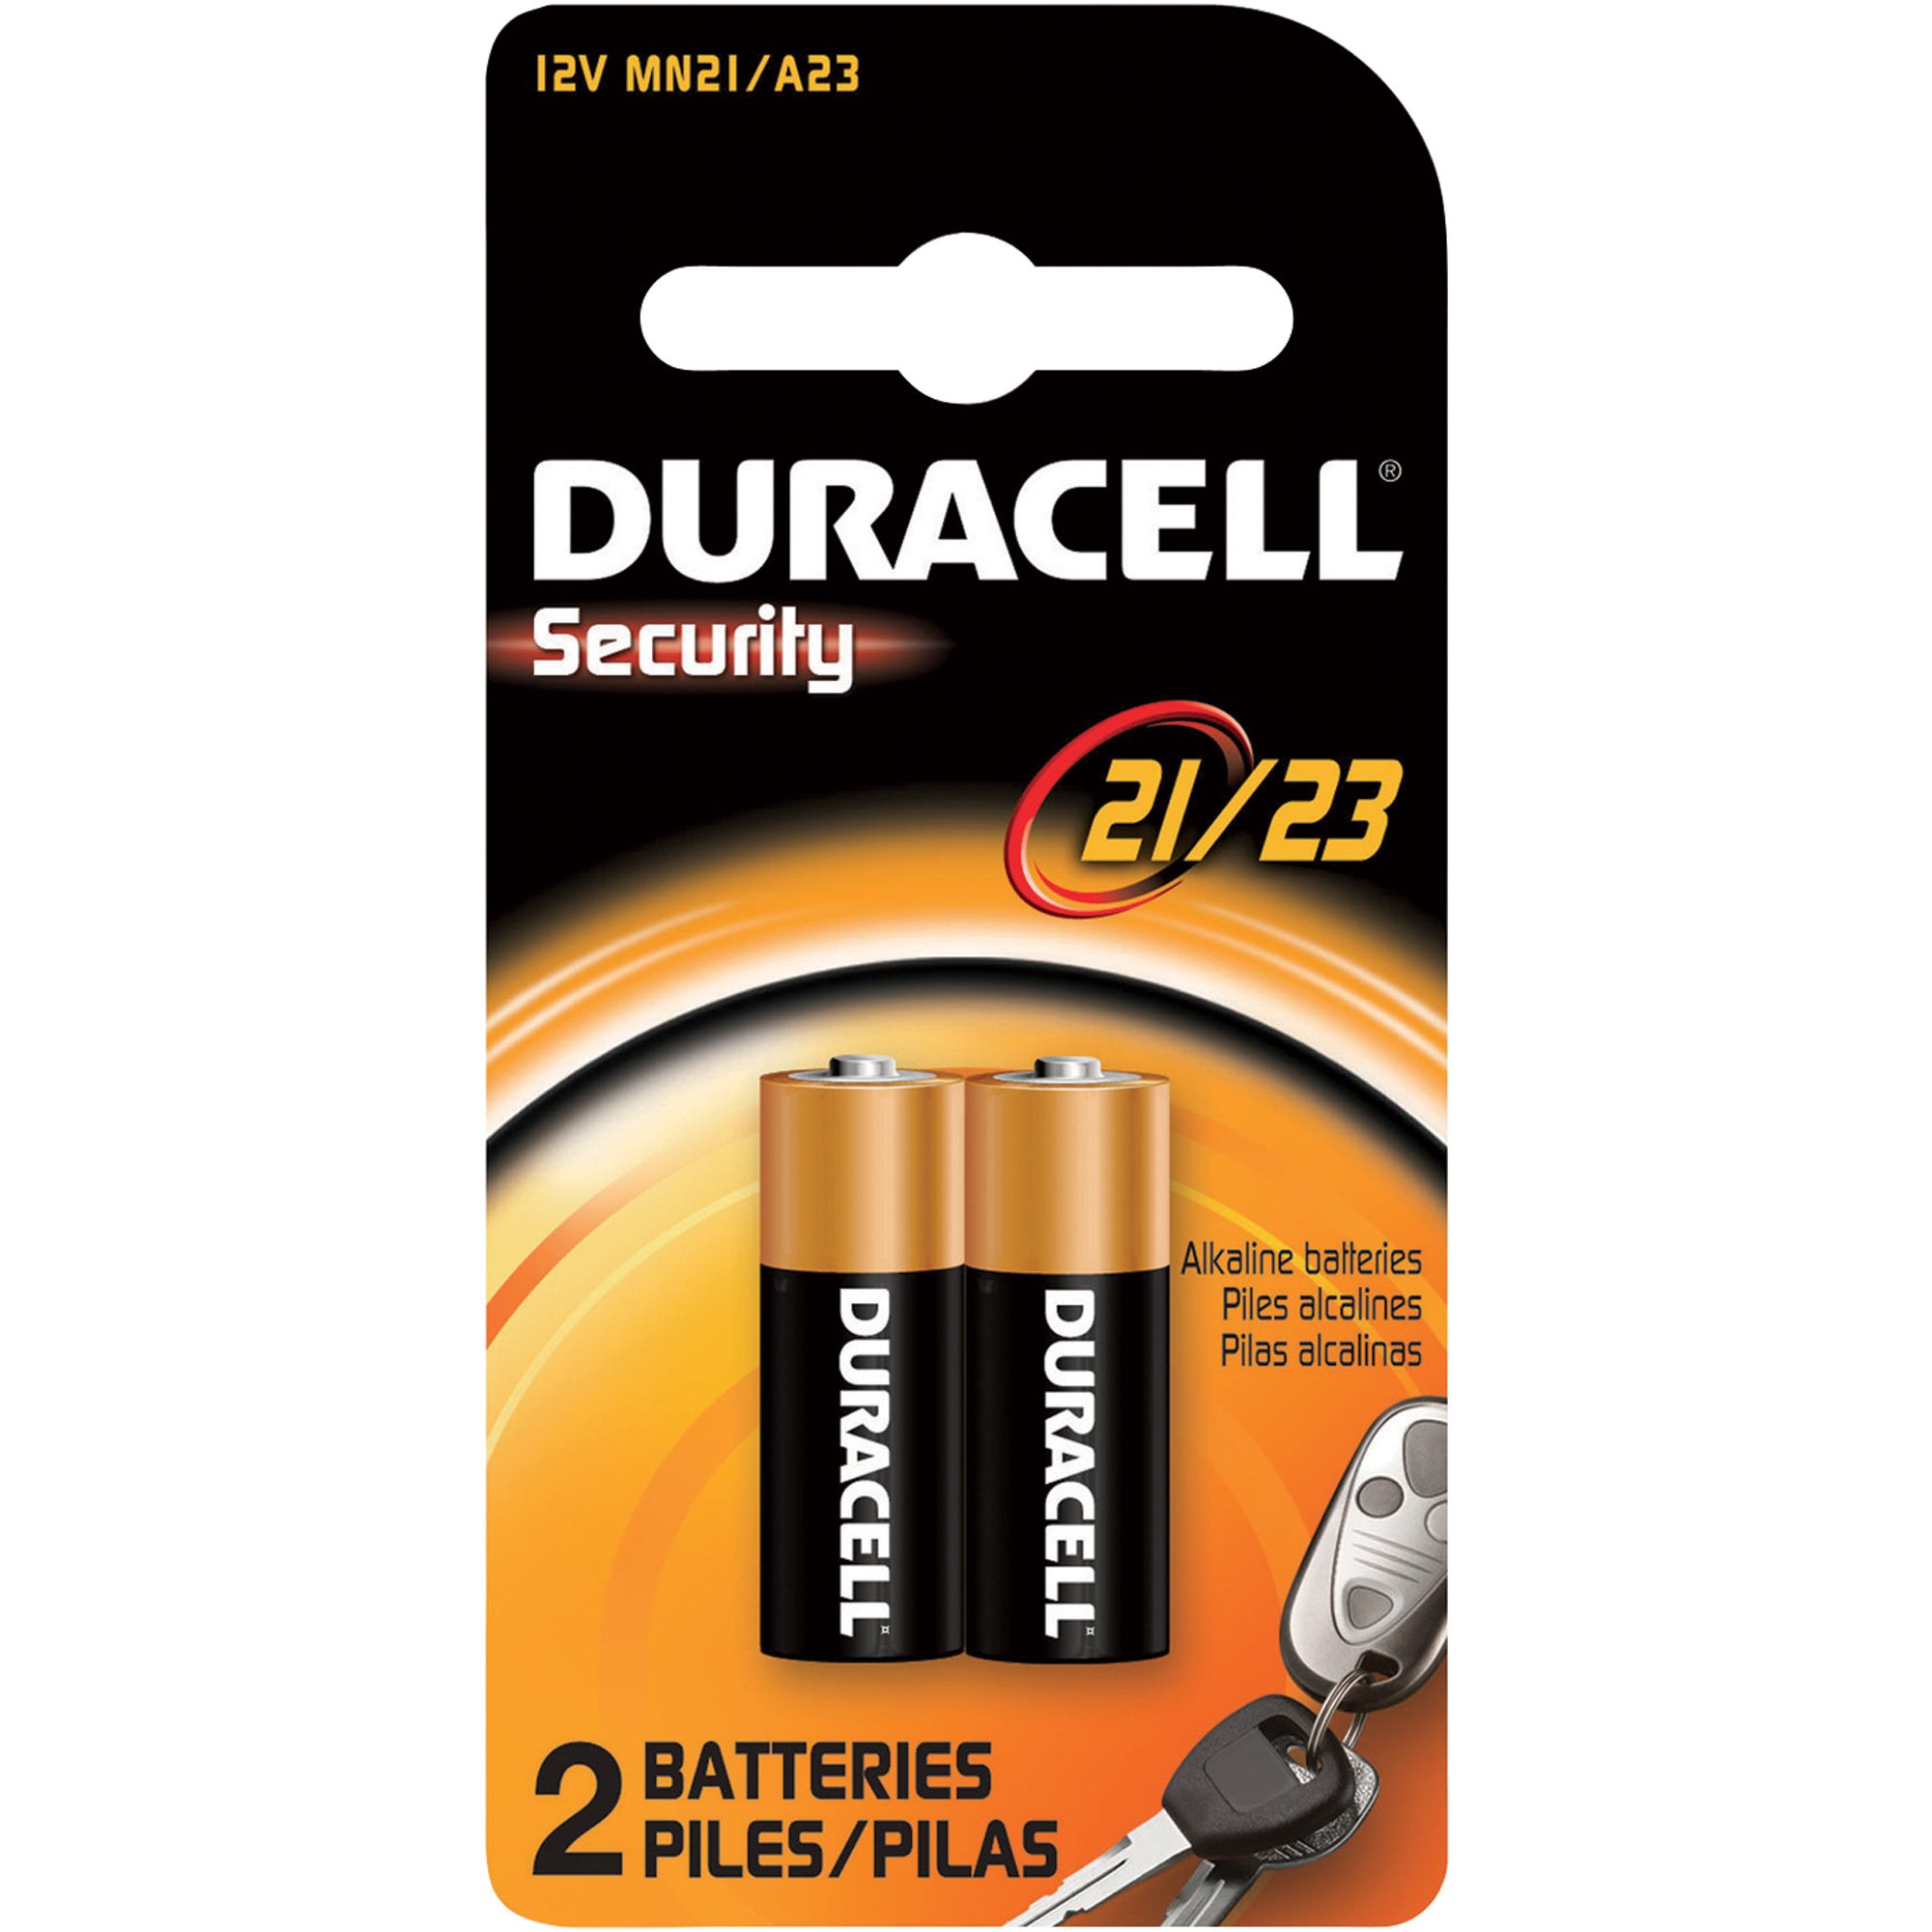 stoel Zeehaven dividend Duracell Alkaline 12V 21/23 Security Batteries — 2-Pack, Model# MN212B2PK09  | Northern Tool